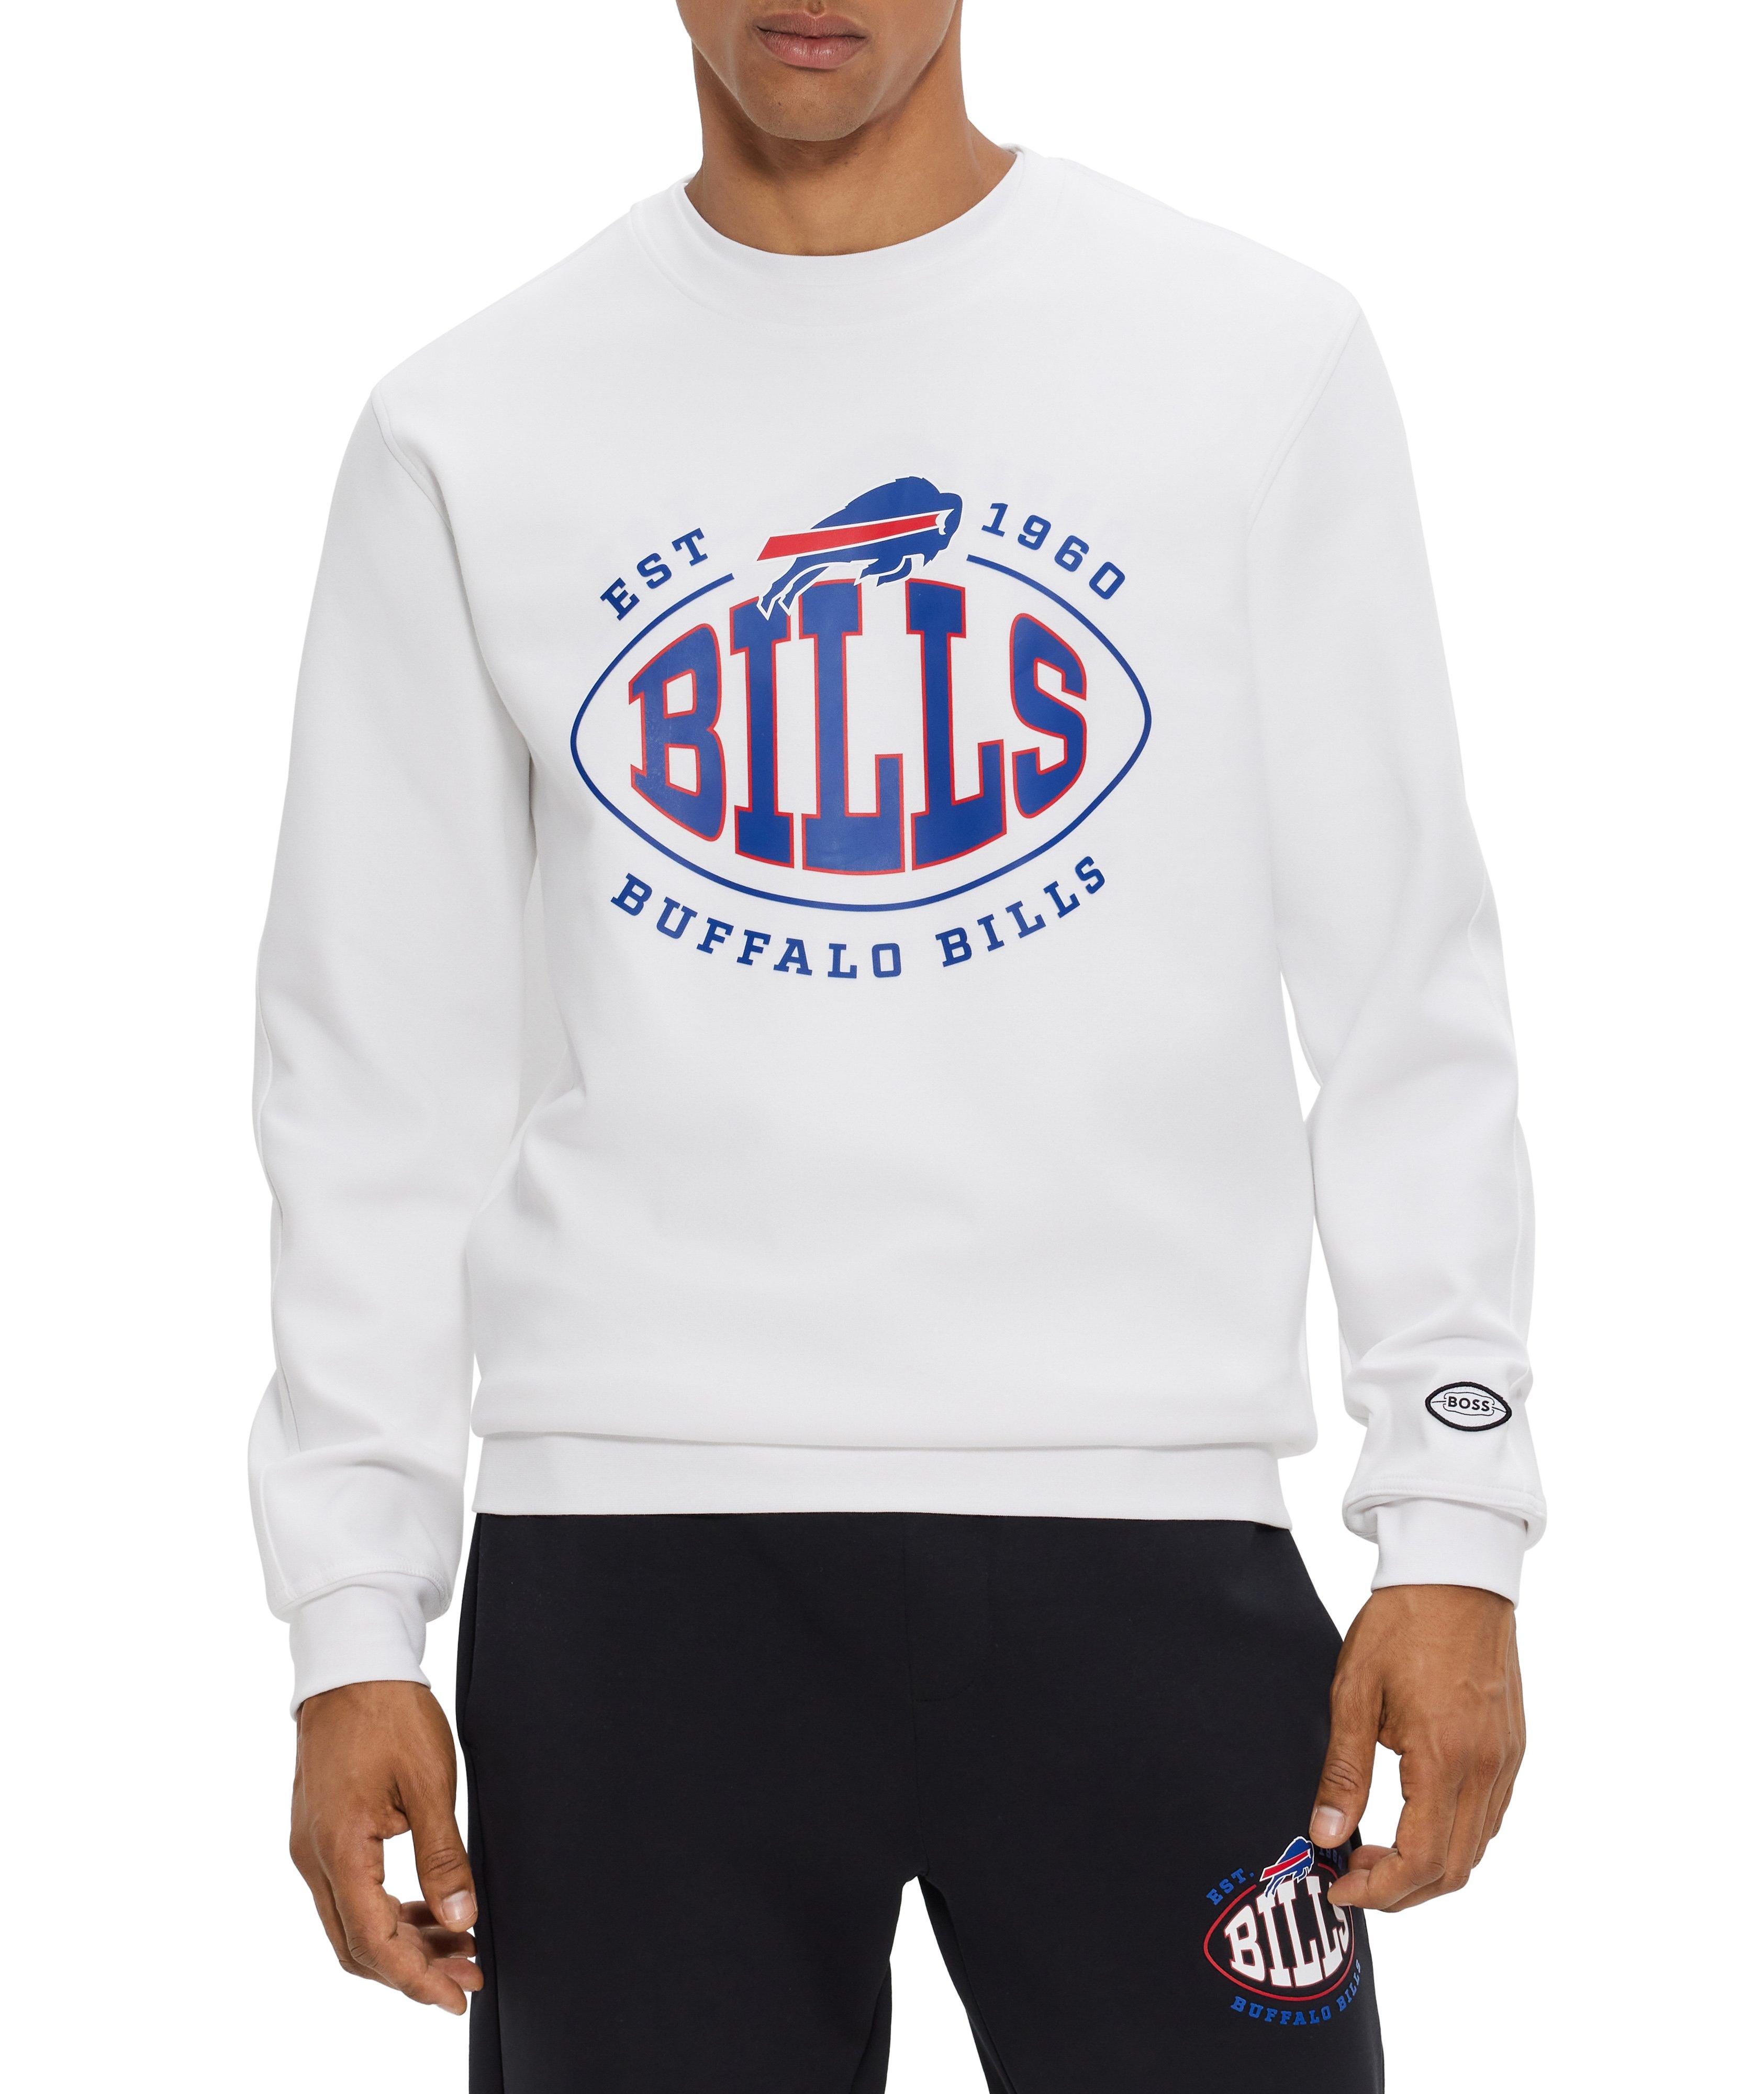 NFL Collection Buffalo Bills Sweatshirt image 1